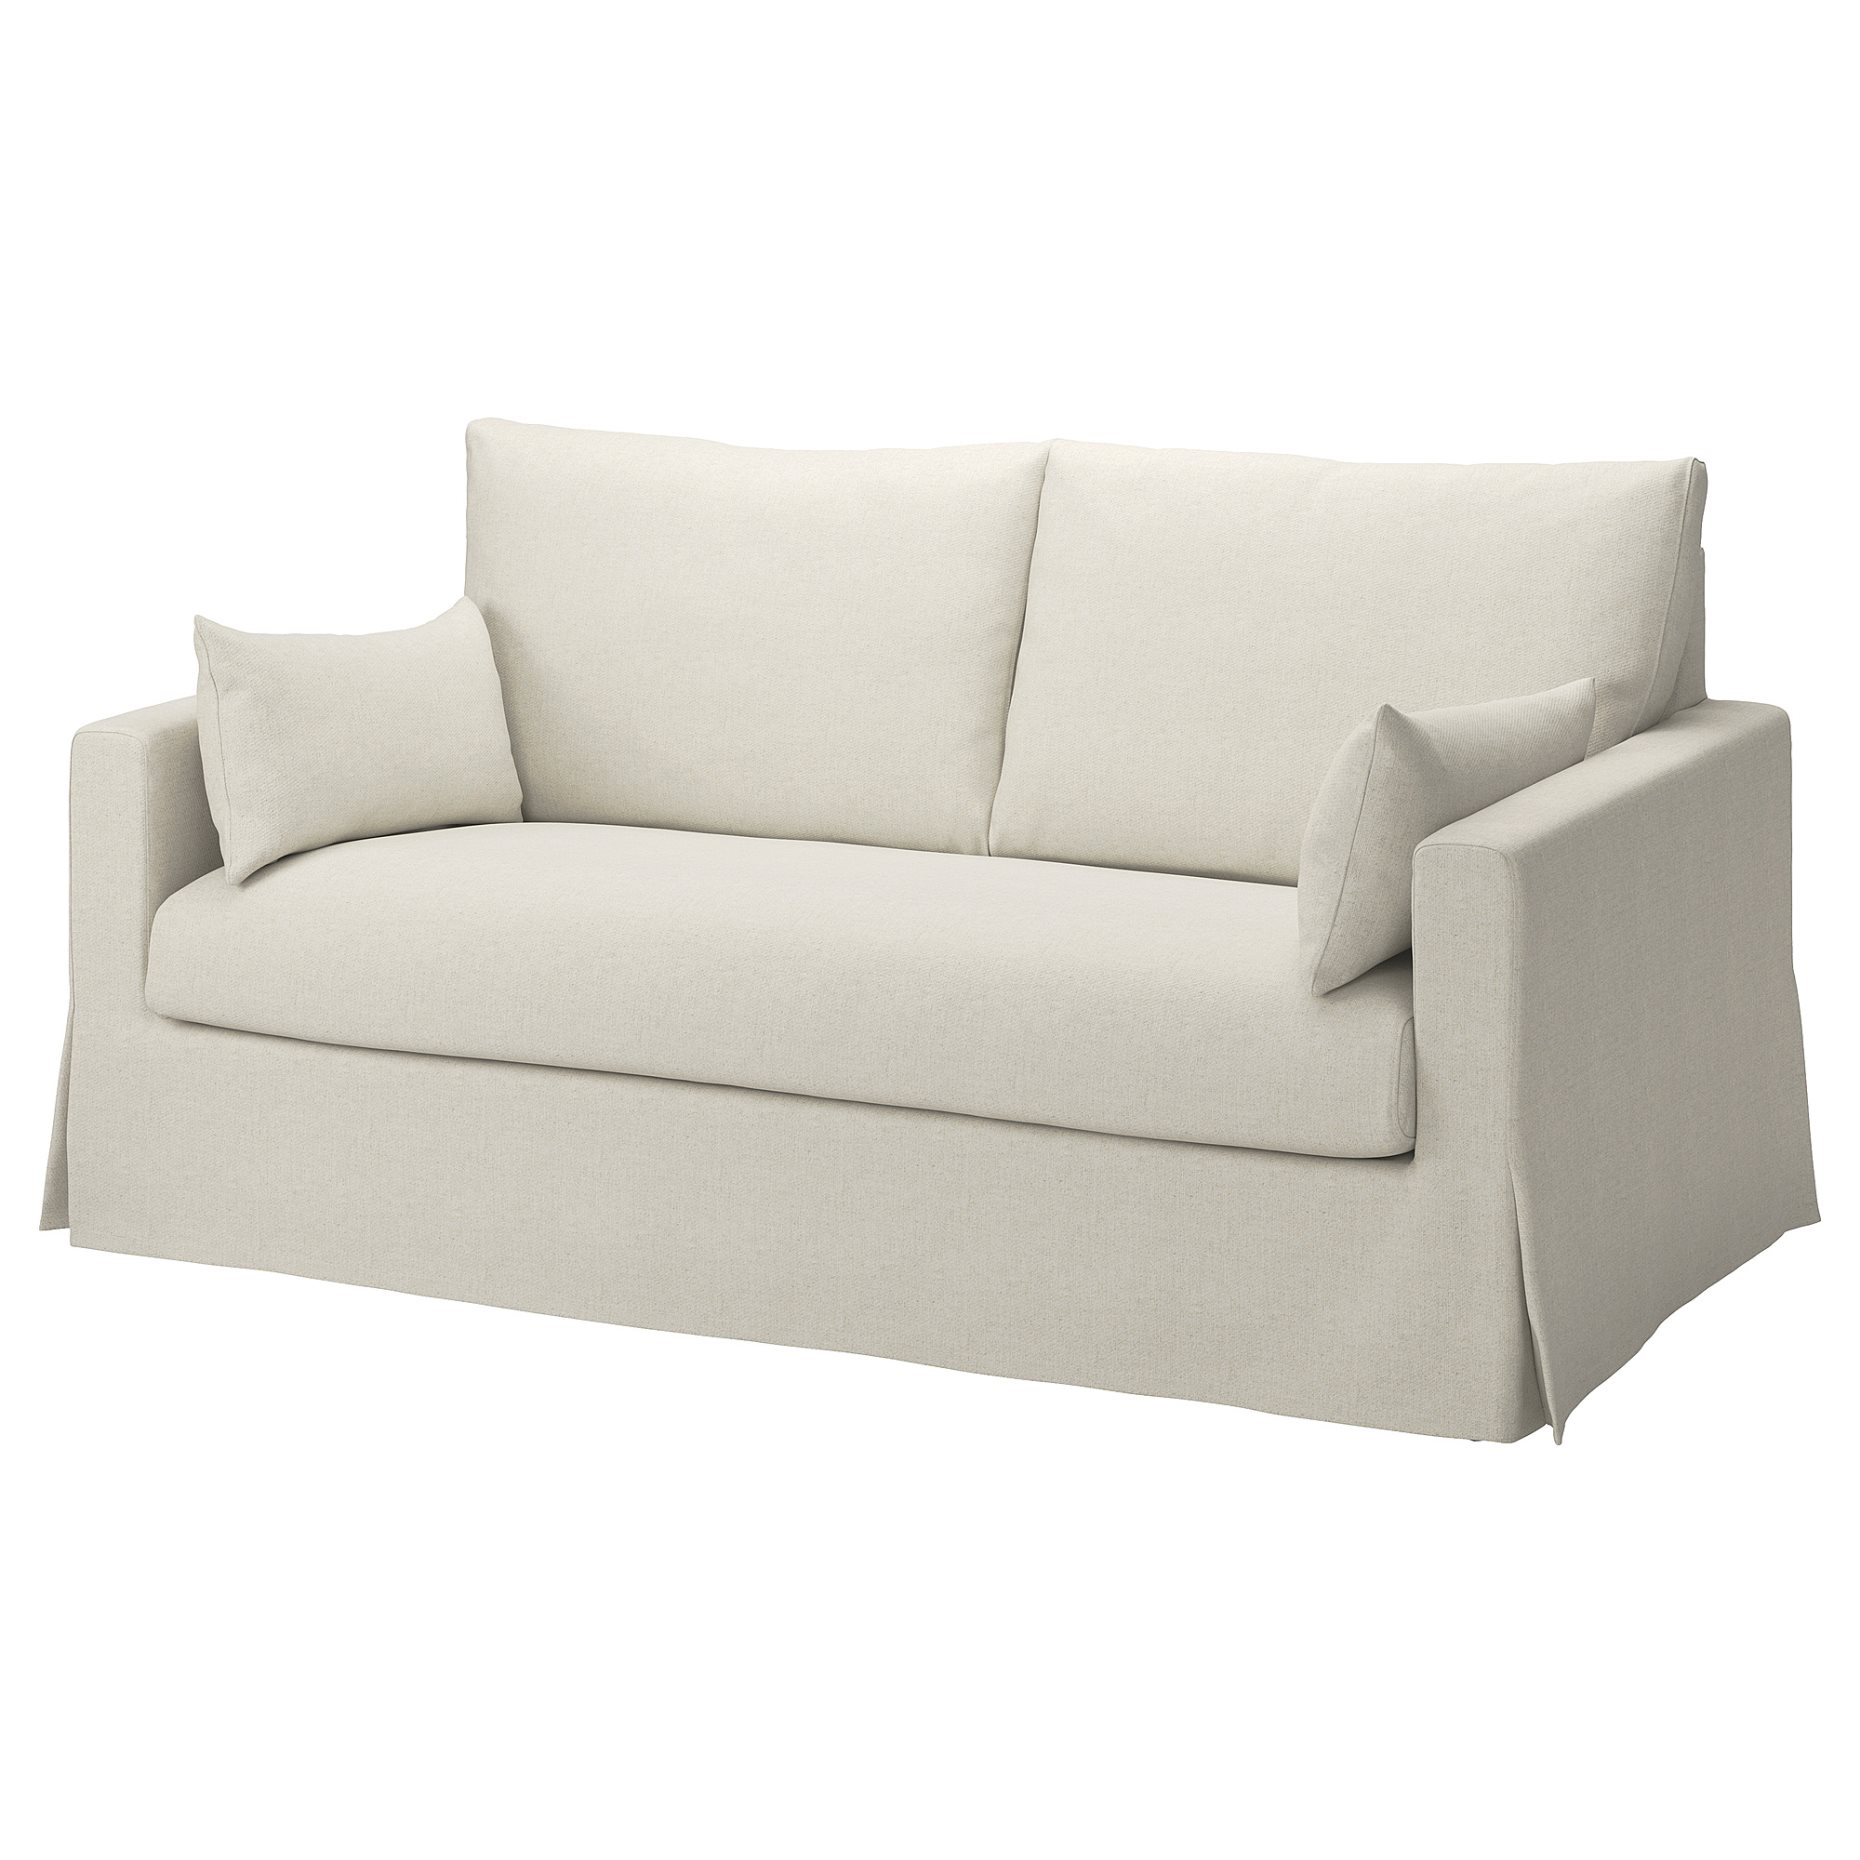 HYLTARP, cover for 2-seat sofa, 305.473.86